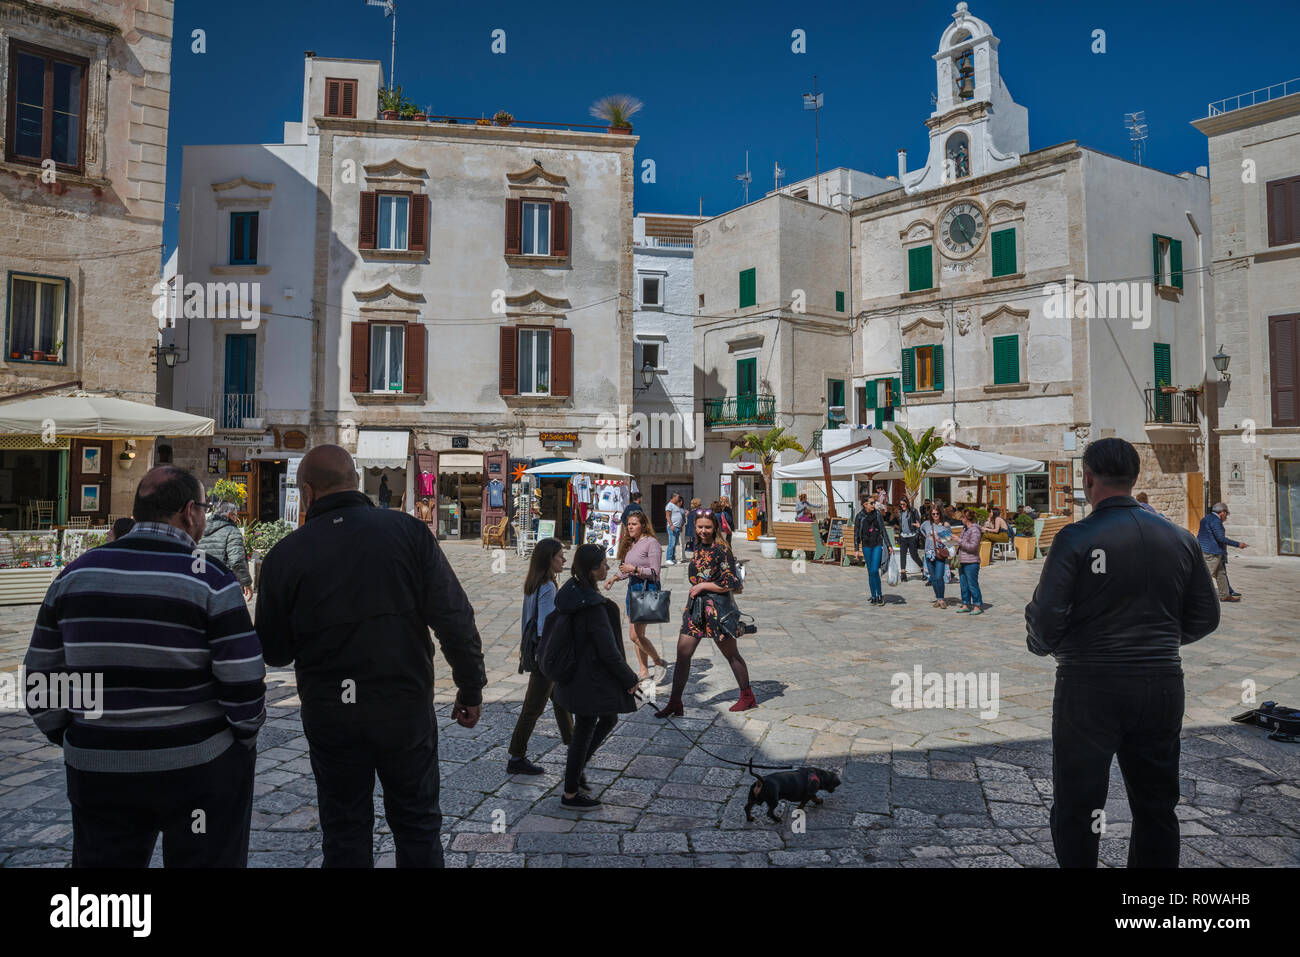 Local people and tourists at Piazza dell'Orologio in Polignano a Mare,  Apulia, Italy Stock Photo - Alamy